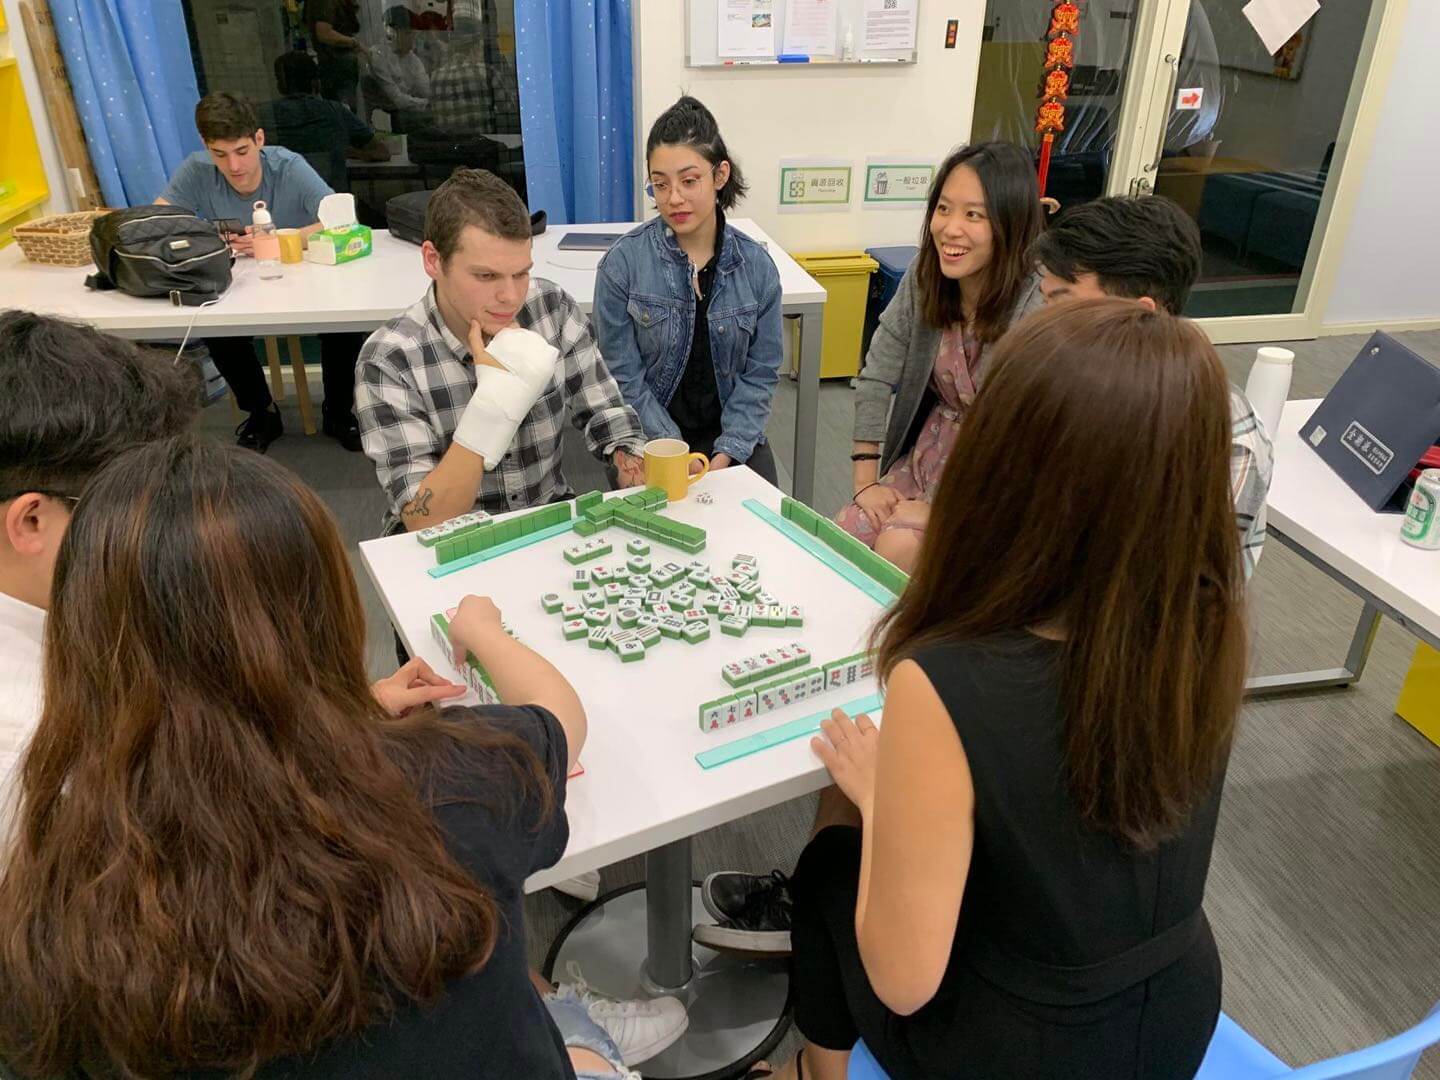 Learning to play Mahjong